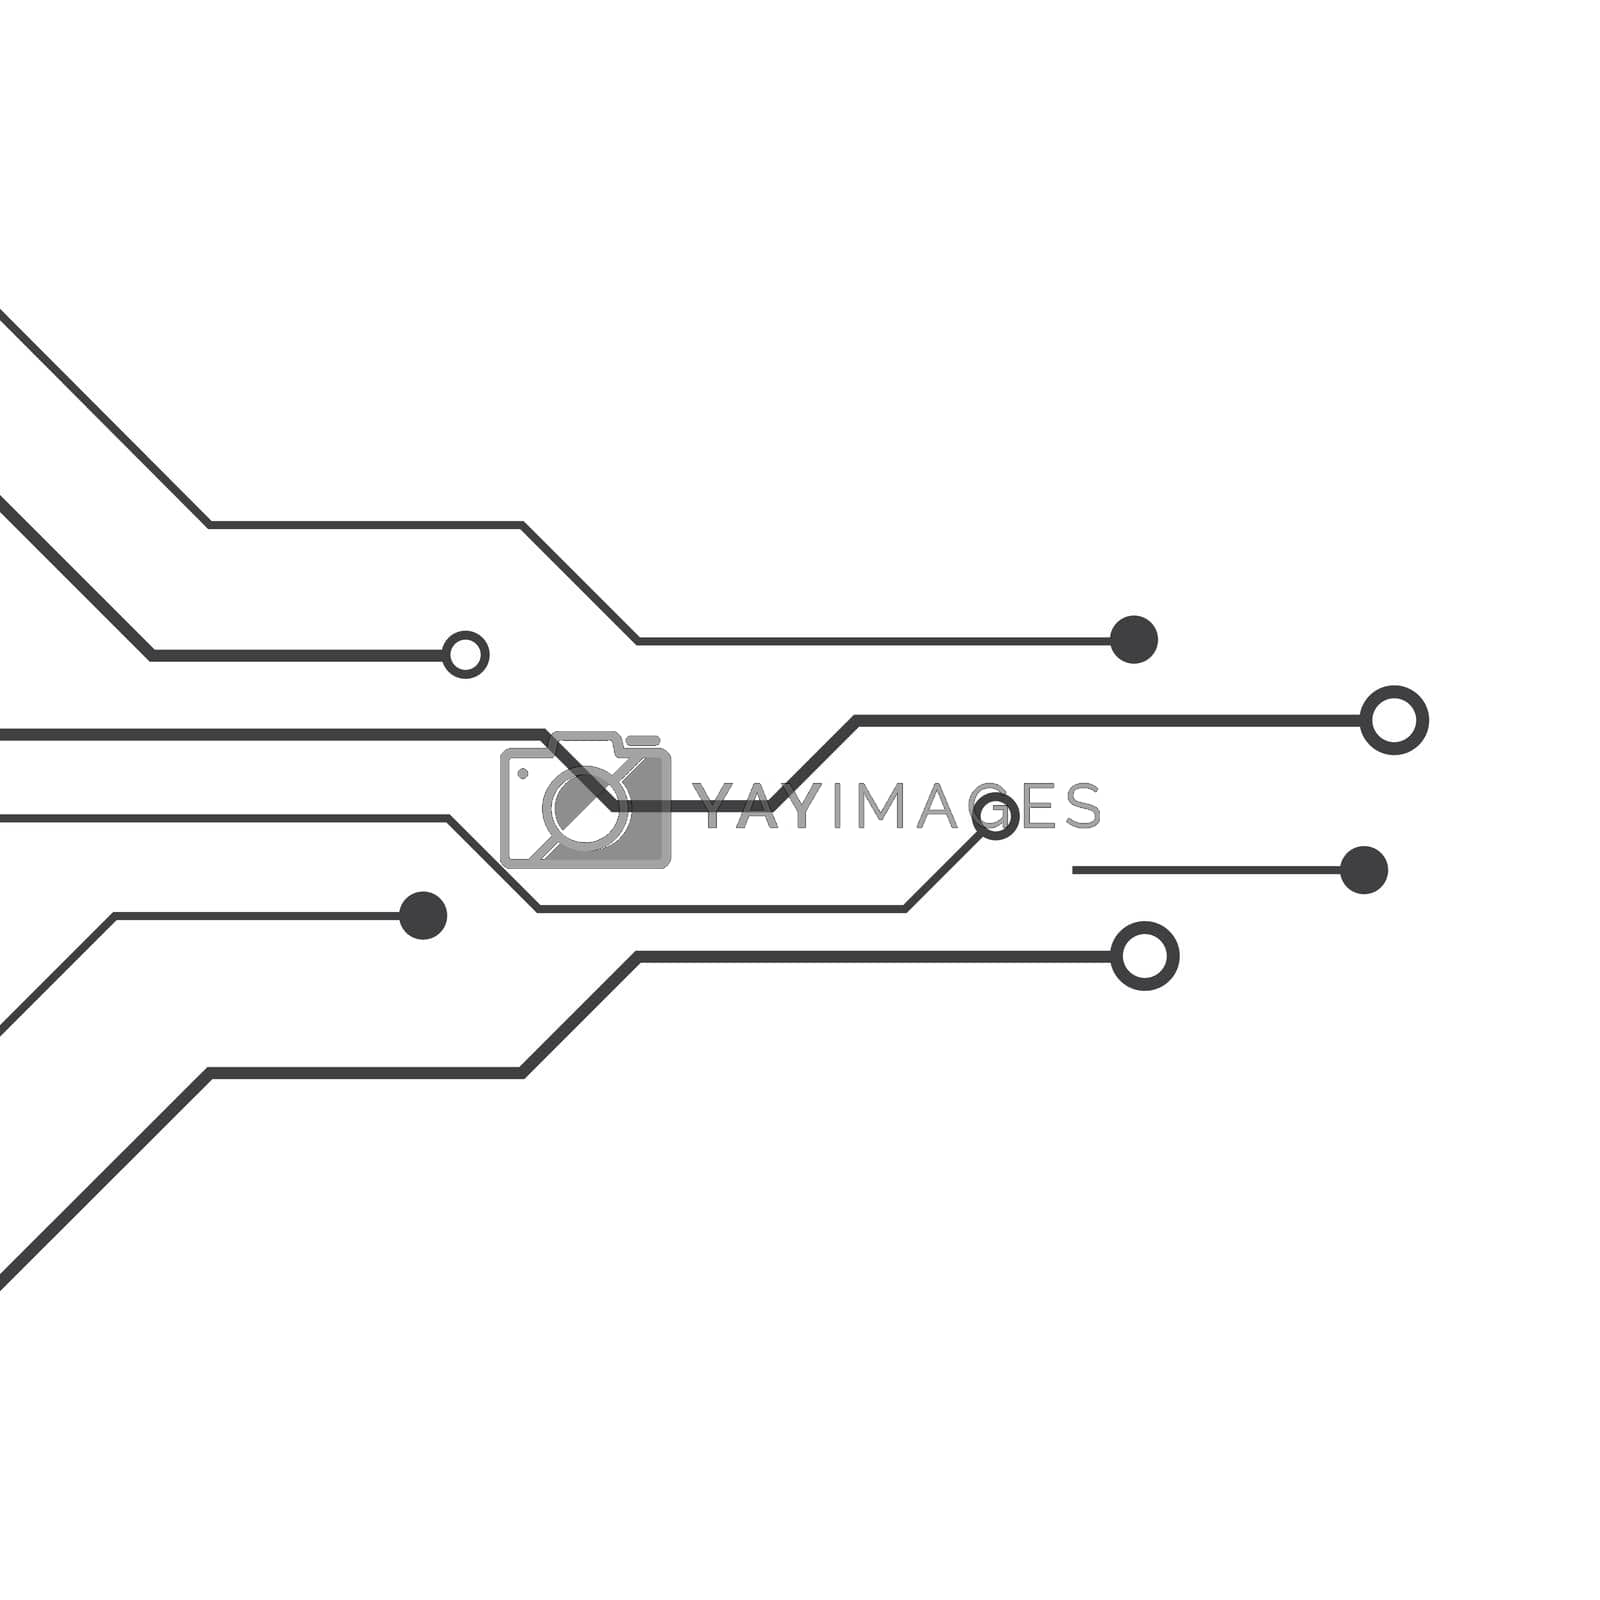 Circuit technology illustration vector template